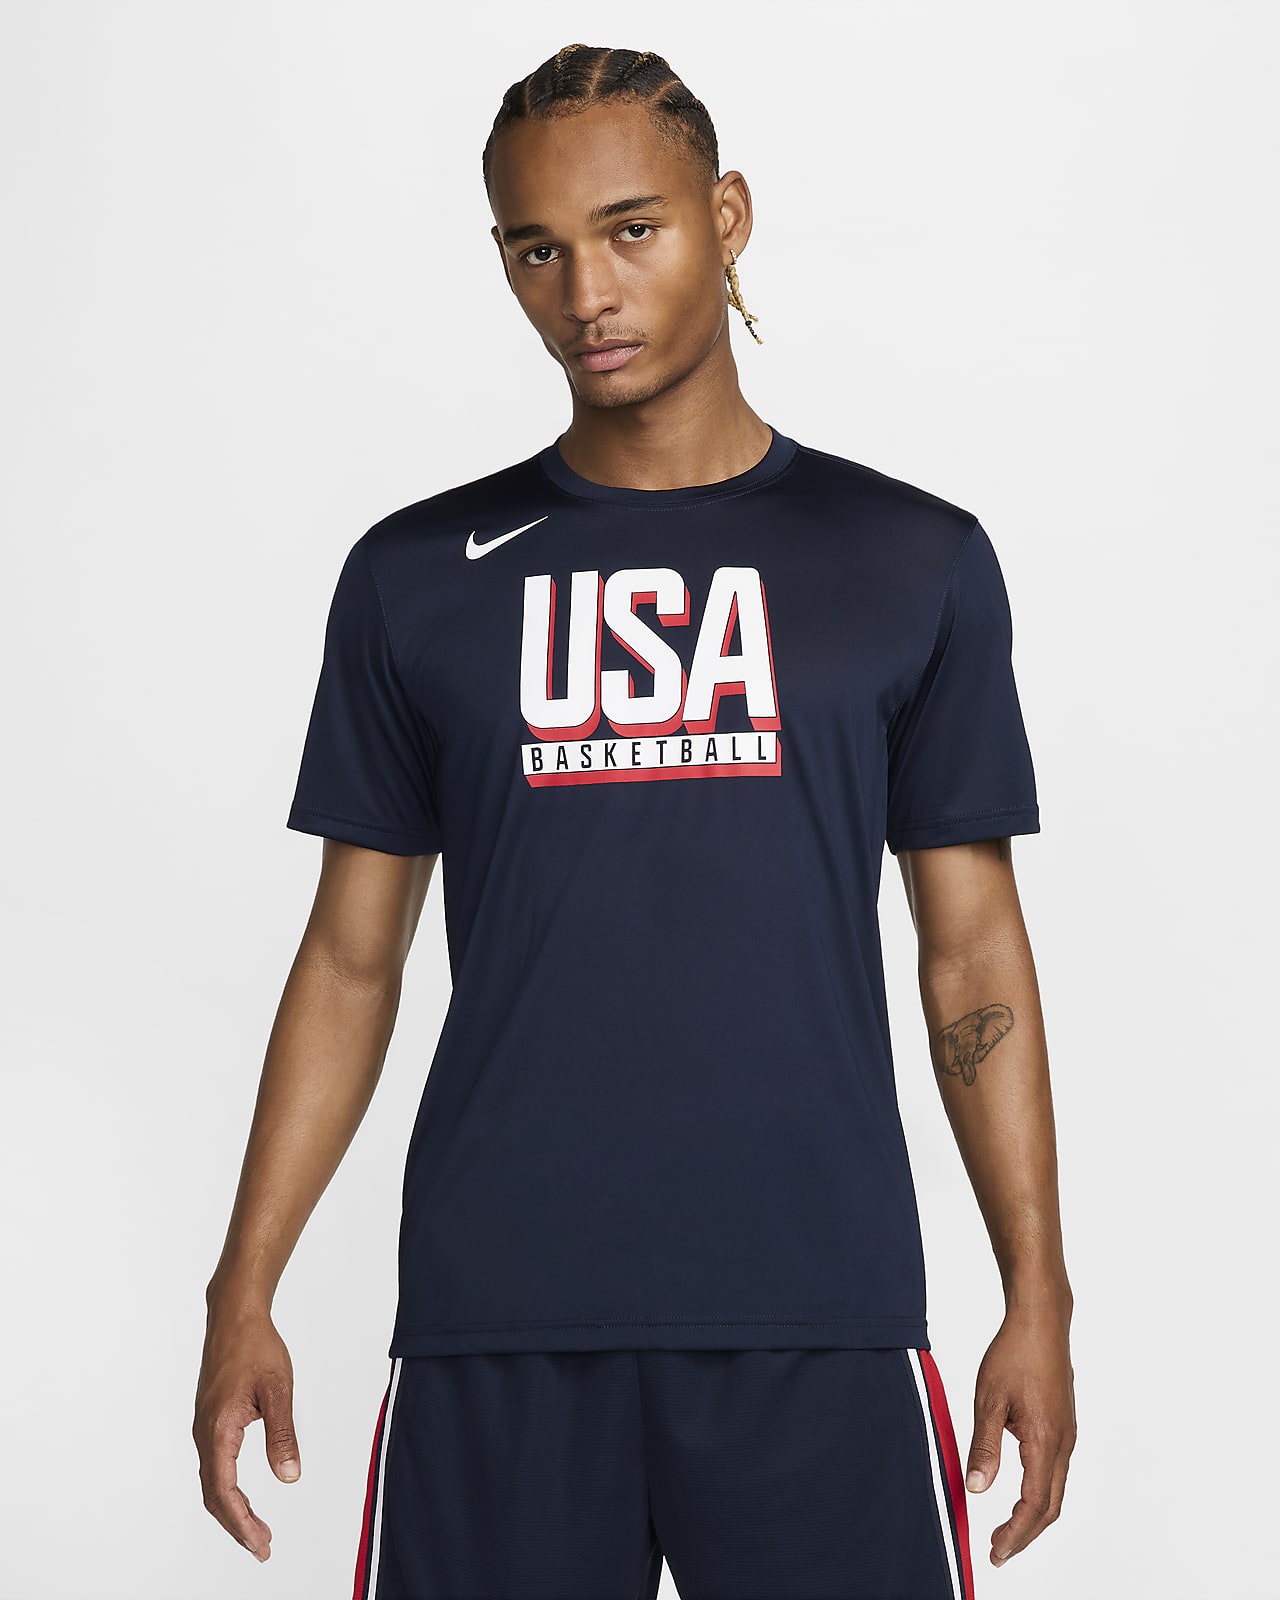 USA プラクティス メンズ ナイキ バスケットボール Tシャツ